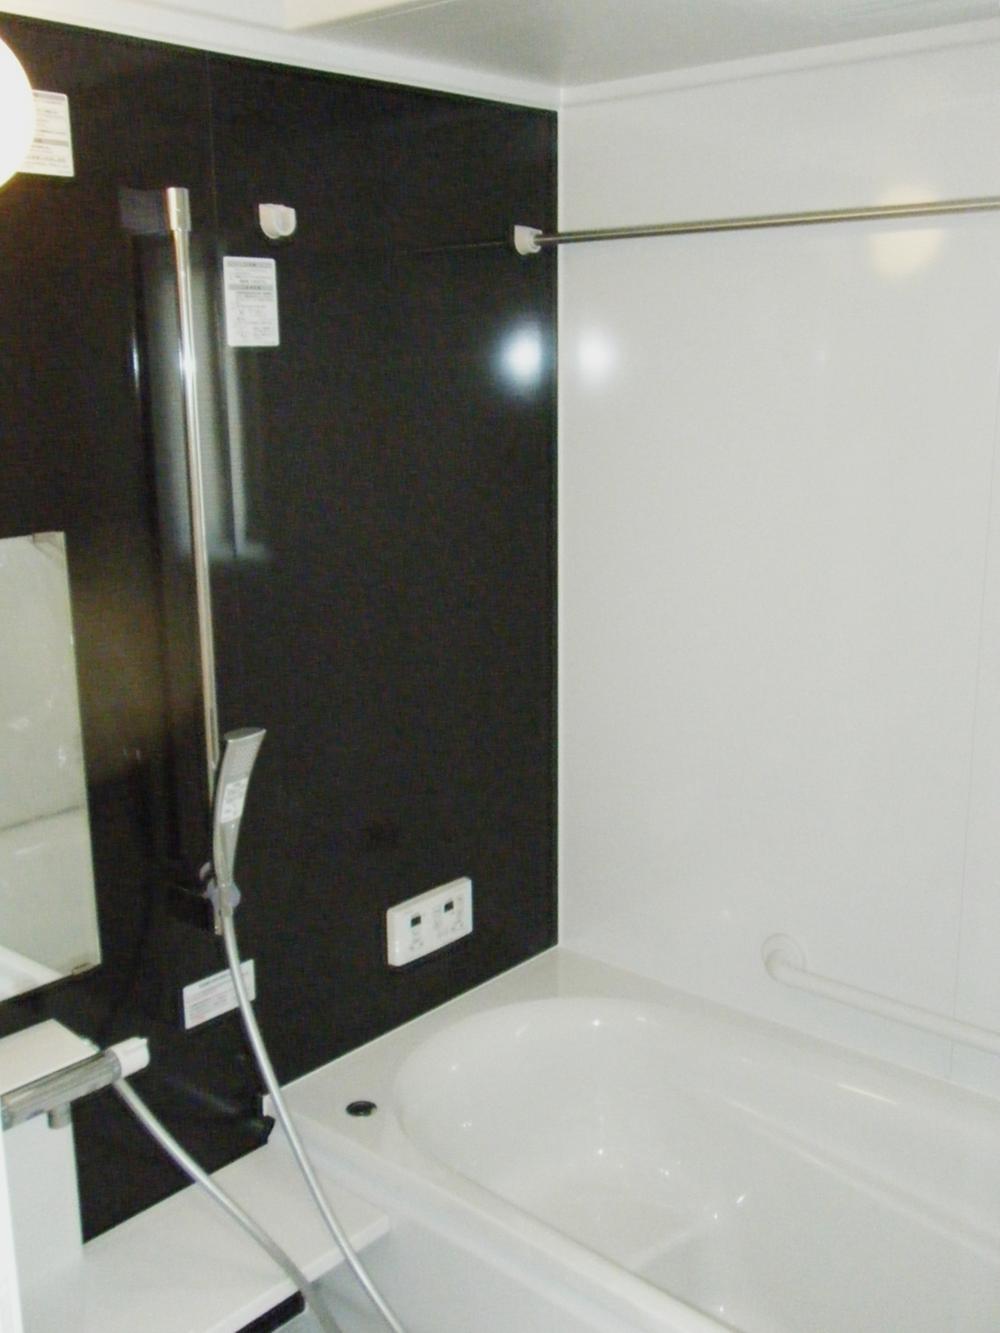 Bathroom. Unit bus with Air Heating dryer